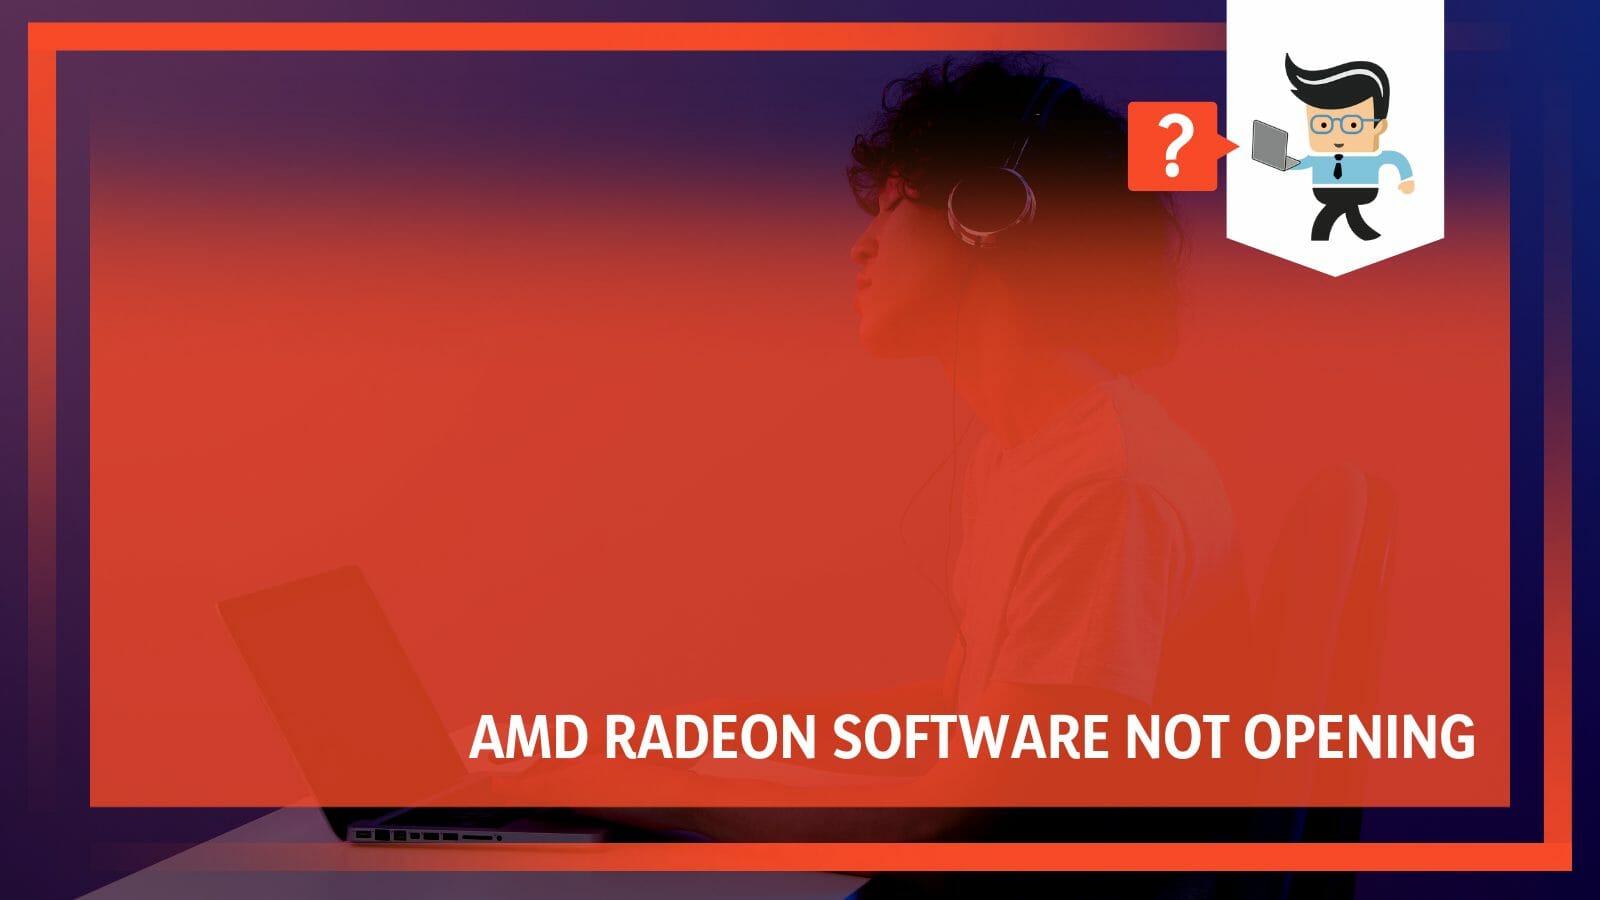 AMD Radeon software not opening